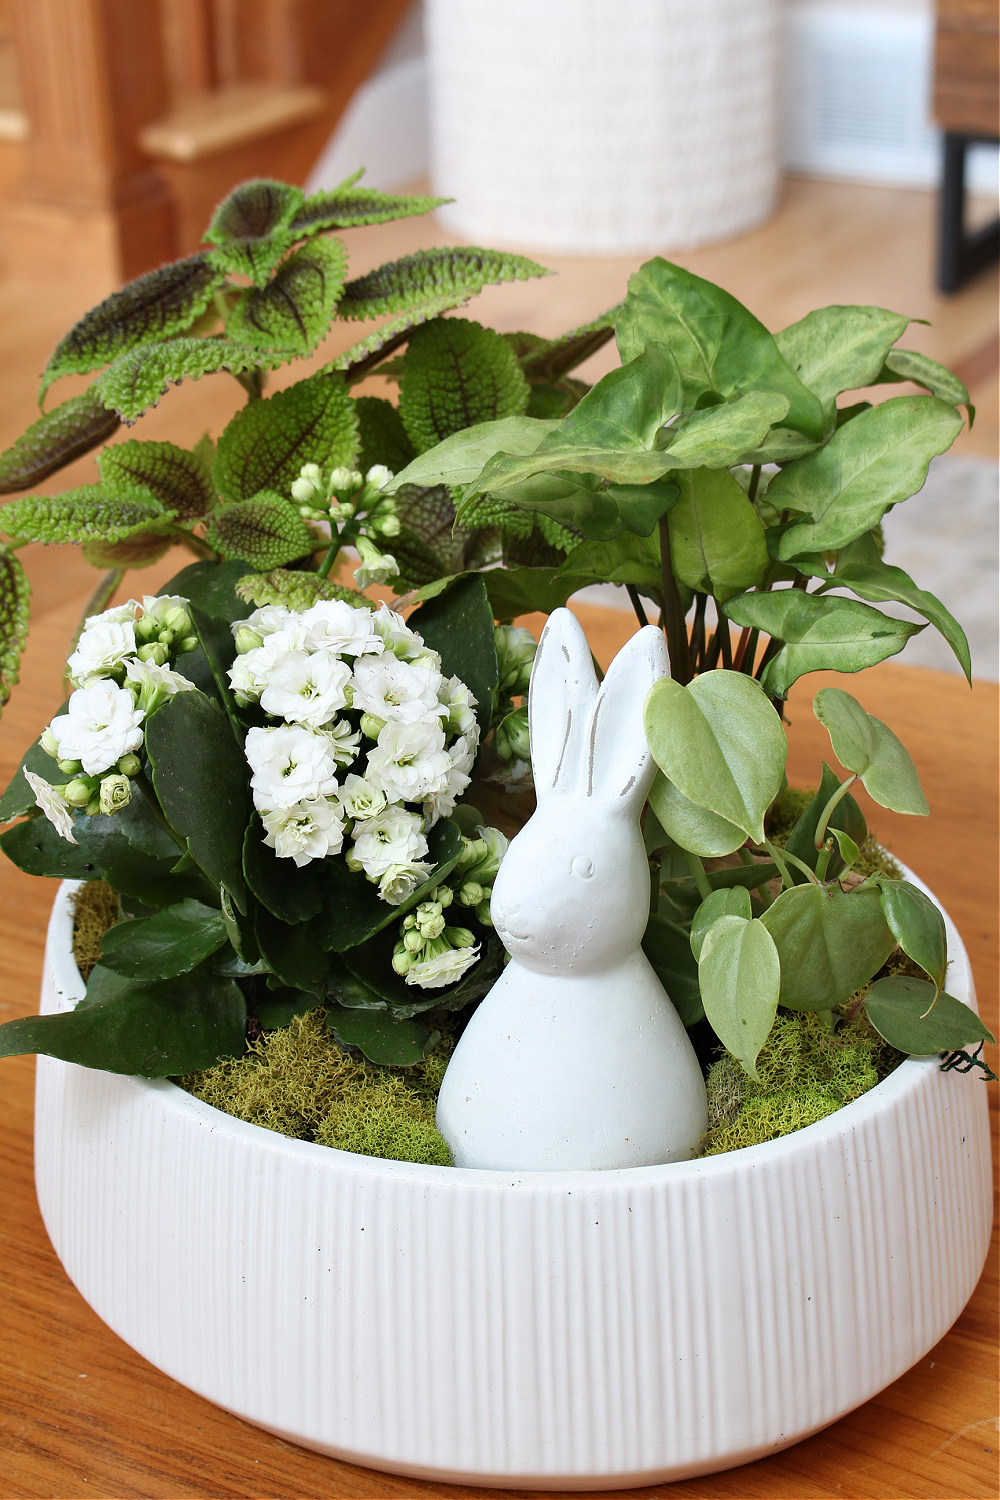 Cute spring tropical planter in a white ceramic bowl.